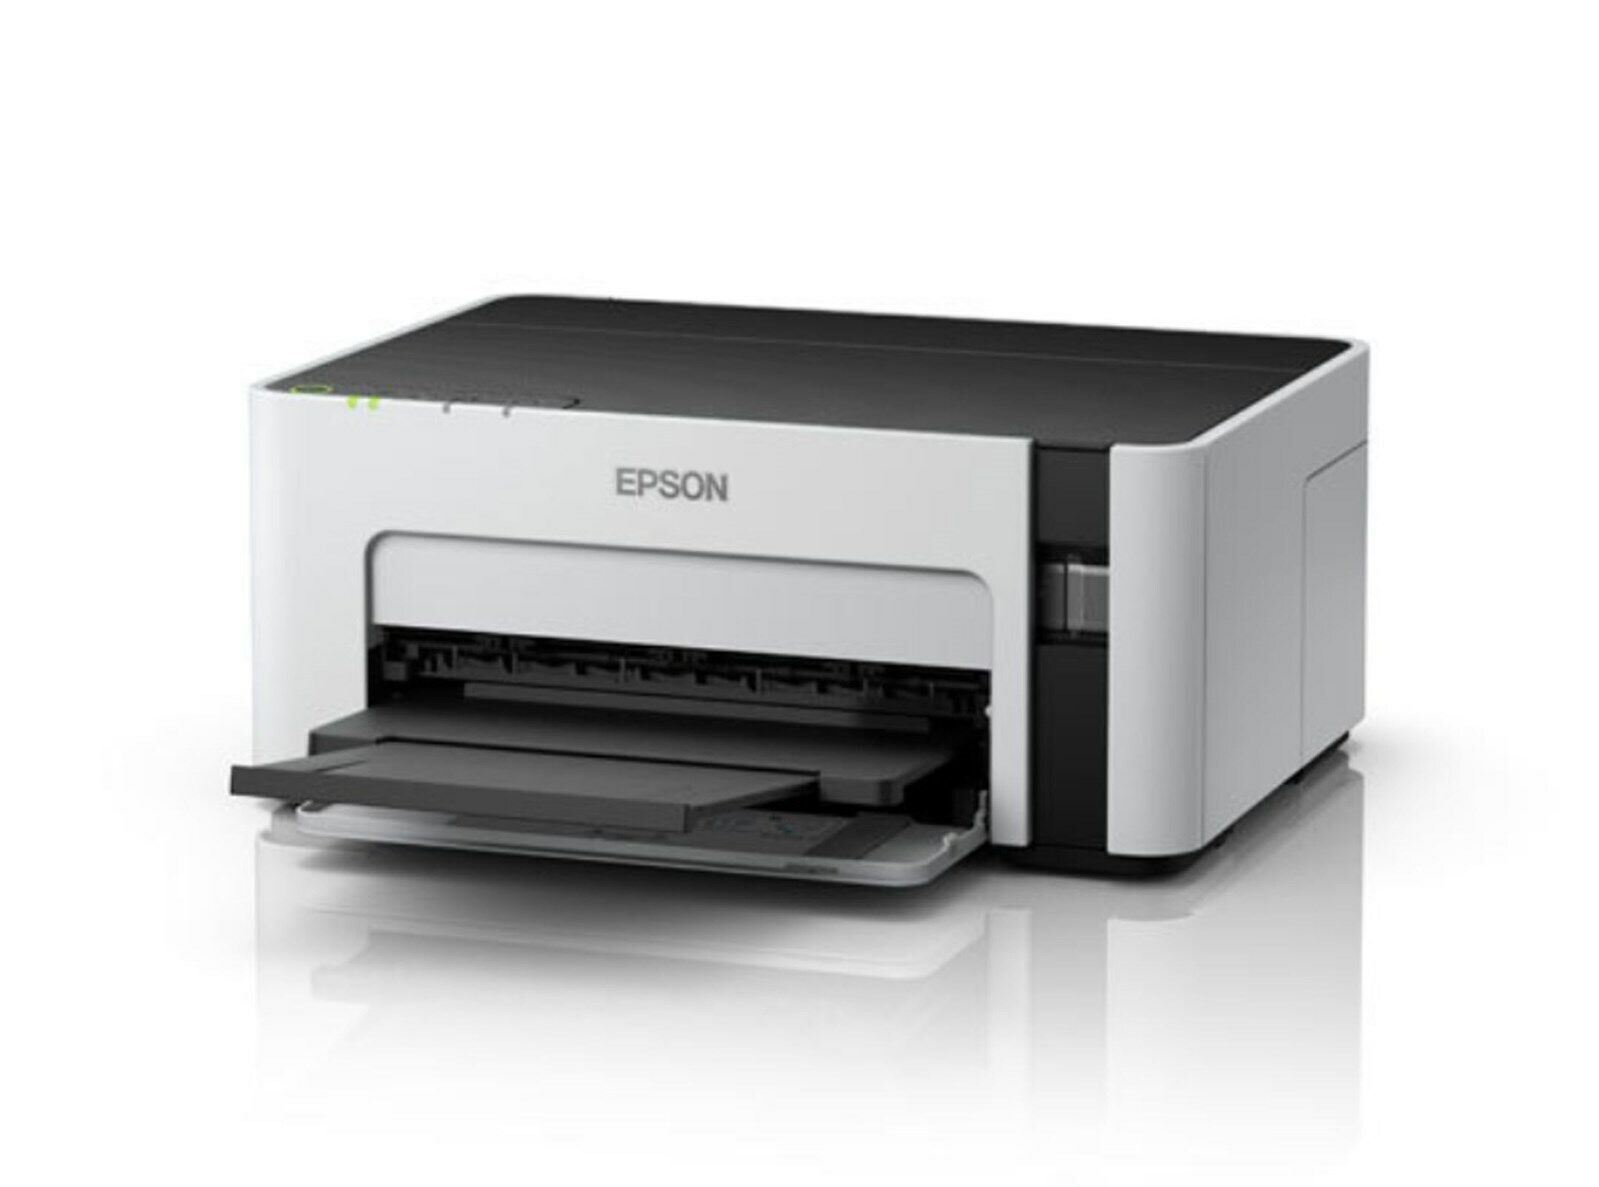 Imprimanta inkjet mono CISS Epson M1120, dimensiune A4, viteza max 32ppm, rezolutie printer 1440x720dpi, alimentare hartie 150 coli, volum maxim printare : 15000pagini/luna, interfata: USB 2.0, Wireless, consumabile: Ecotank MX1xx negru XL (6k/pag.), MX1xx negru L (2k/pag.),cerneala 6k/pag inclusa_3